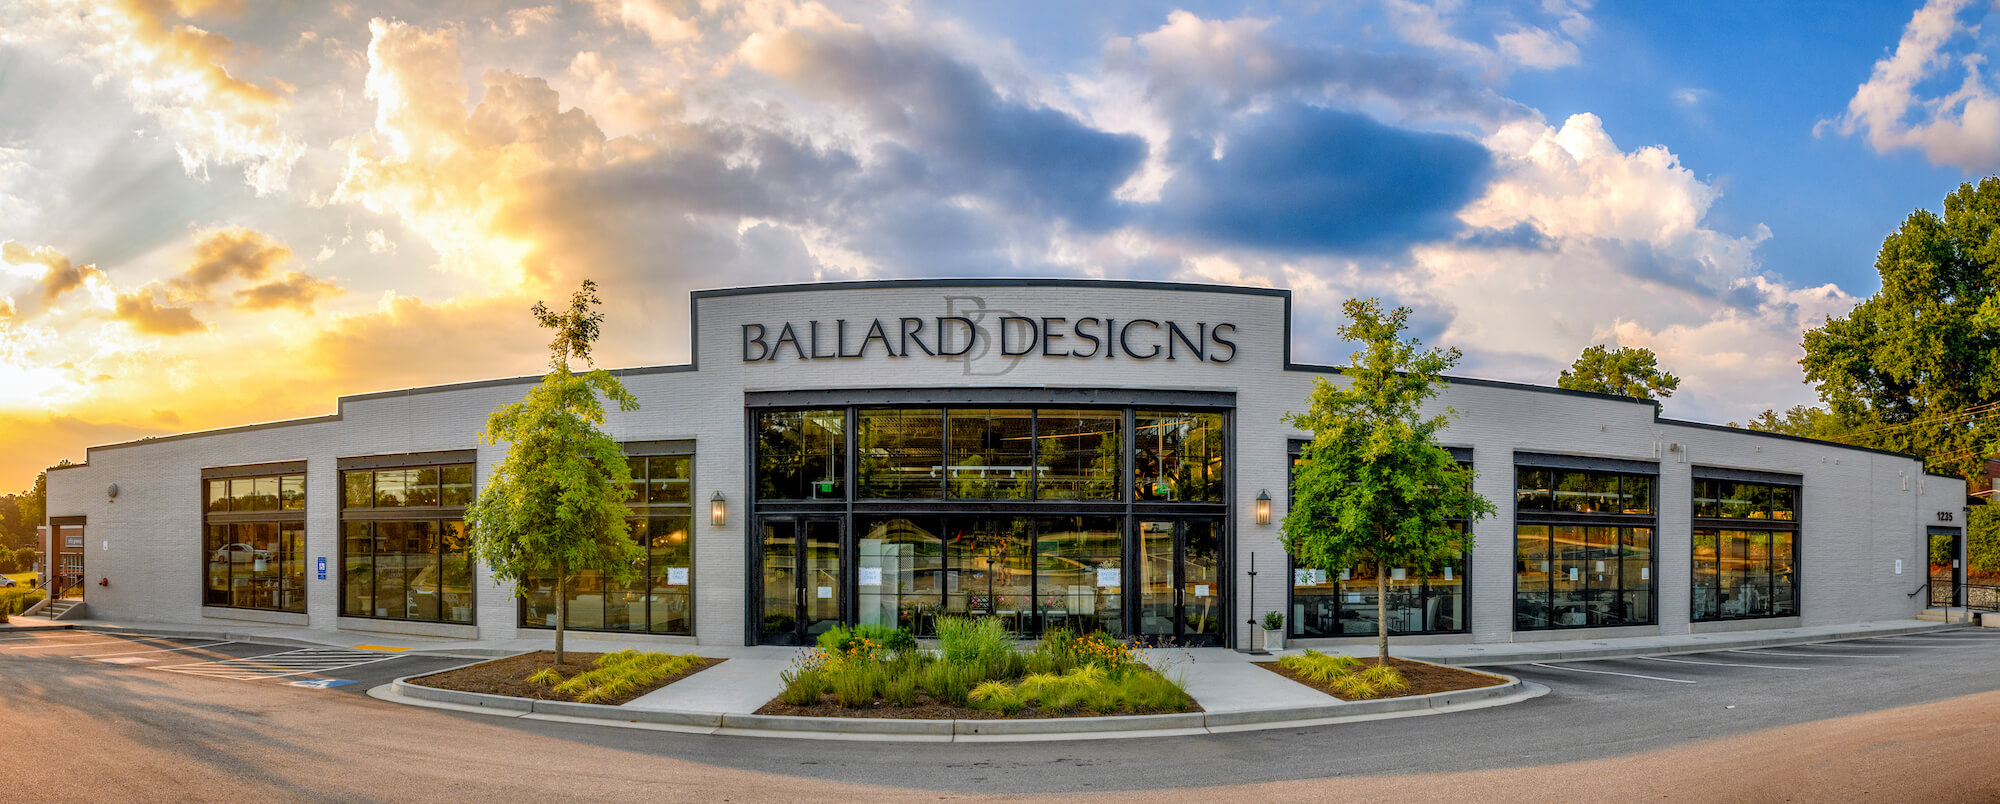 25 Collection Ballard designs defoor avenue for Ideas